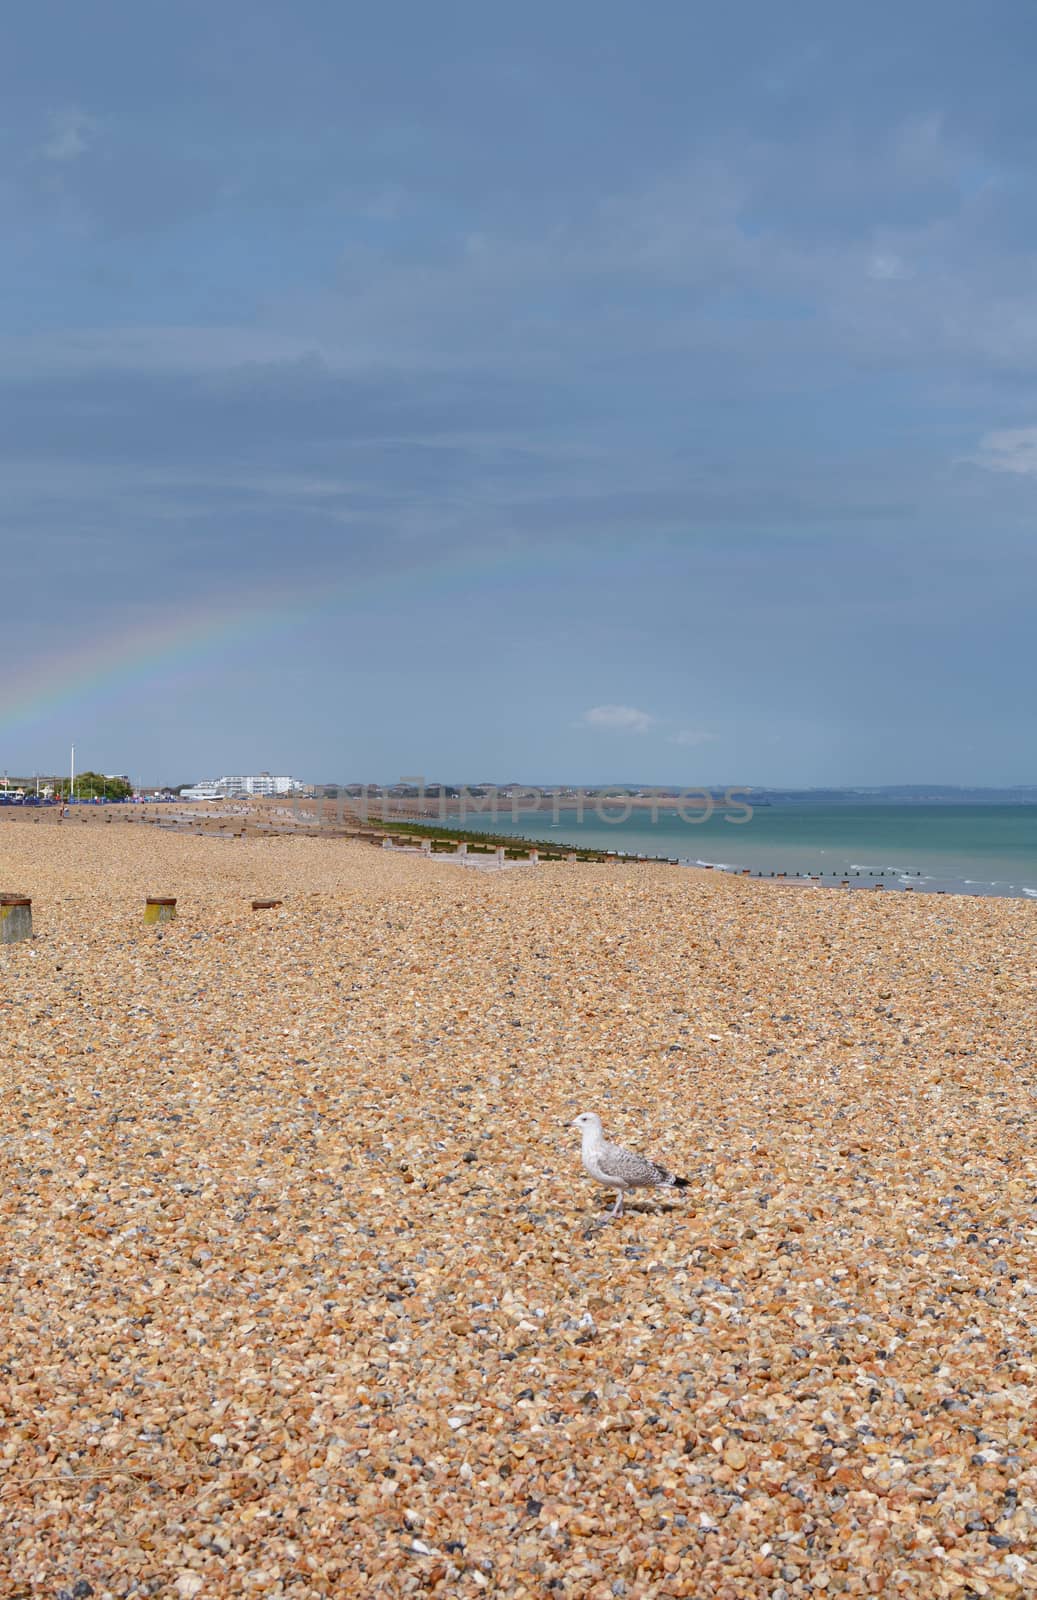 Seagull in sunshine on a pebble beach in Eastbourne; a faint rainbow arches across the dark sky in the distance